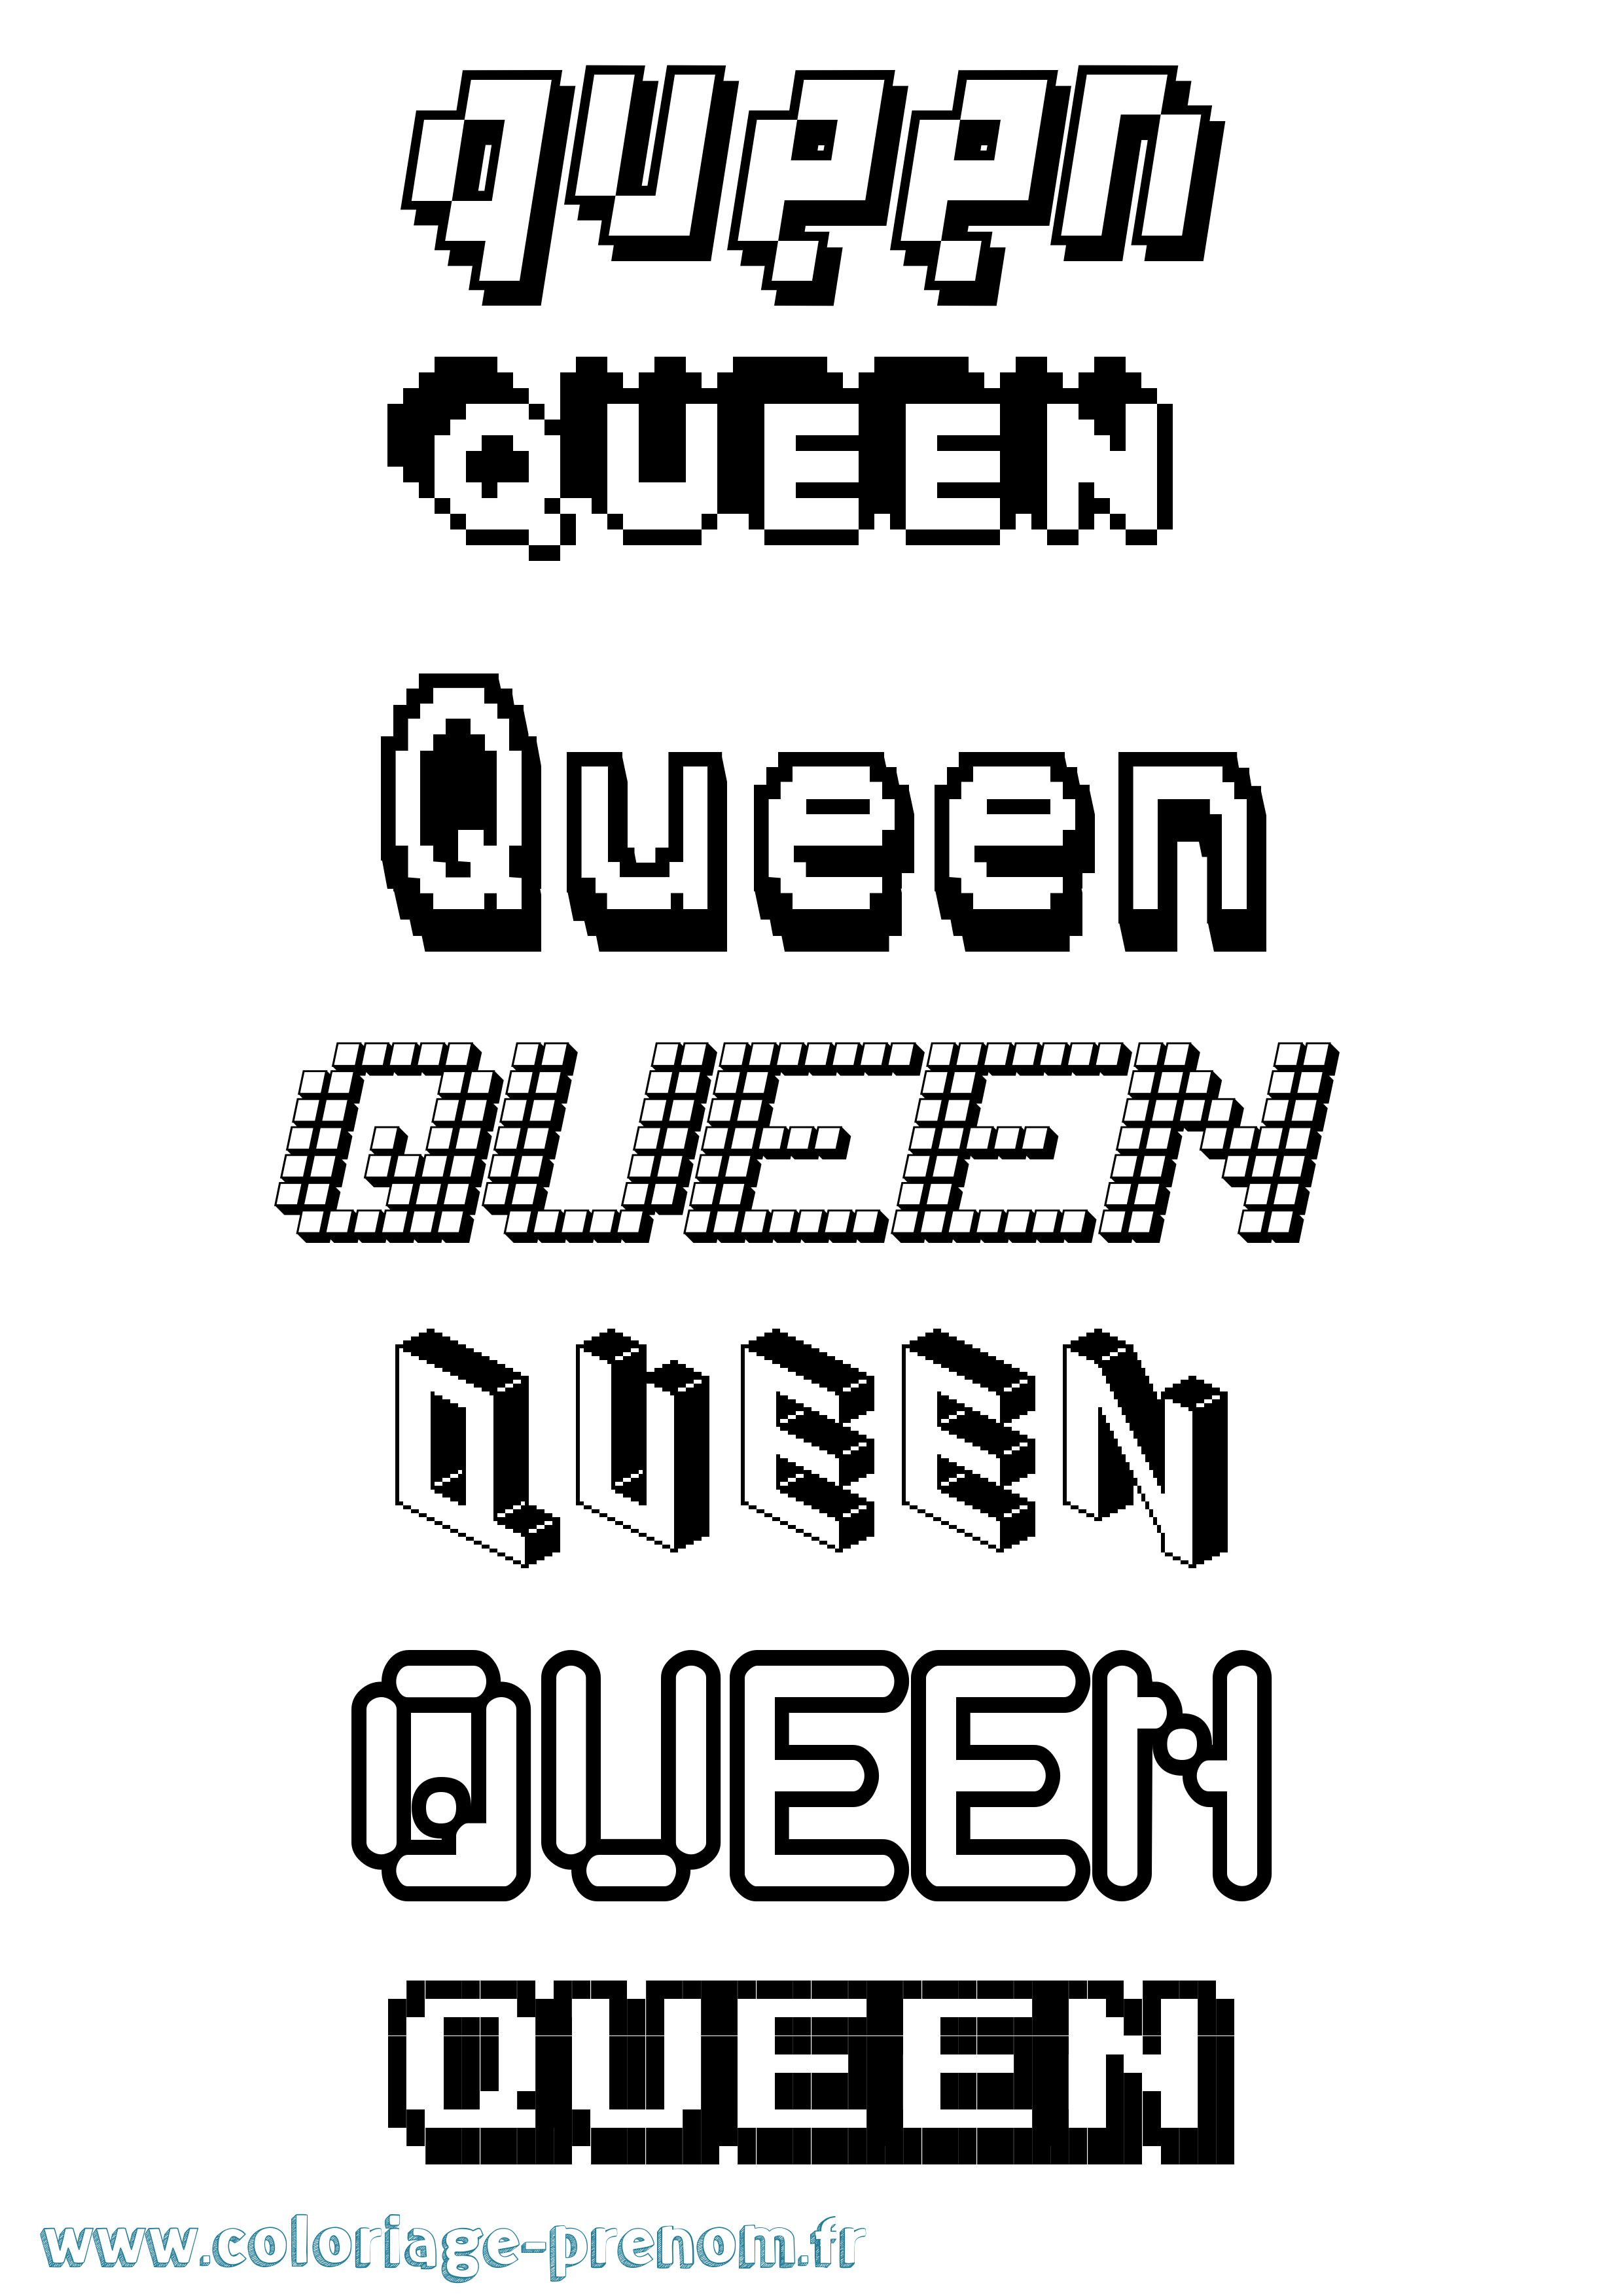 Coloriage prénom Queen Pixel